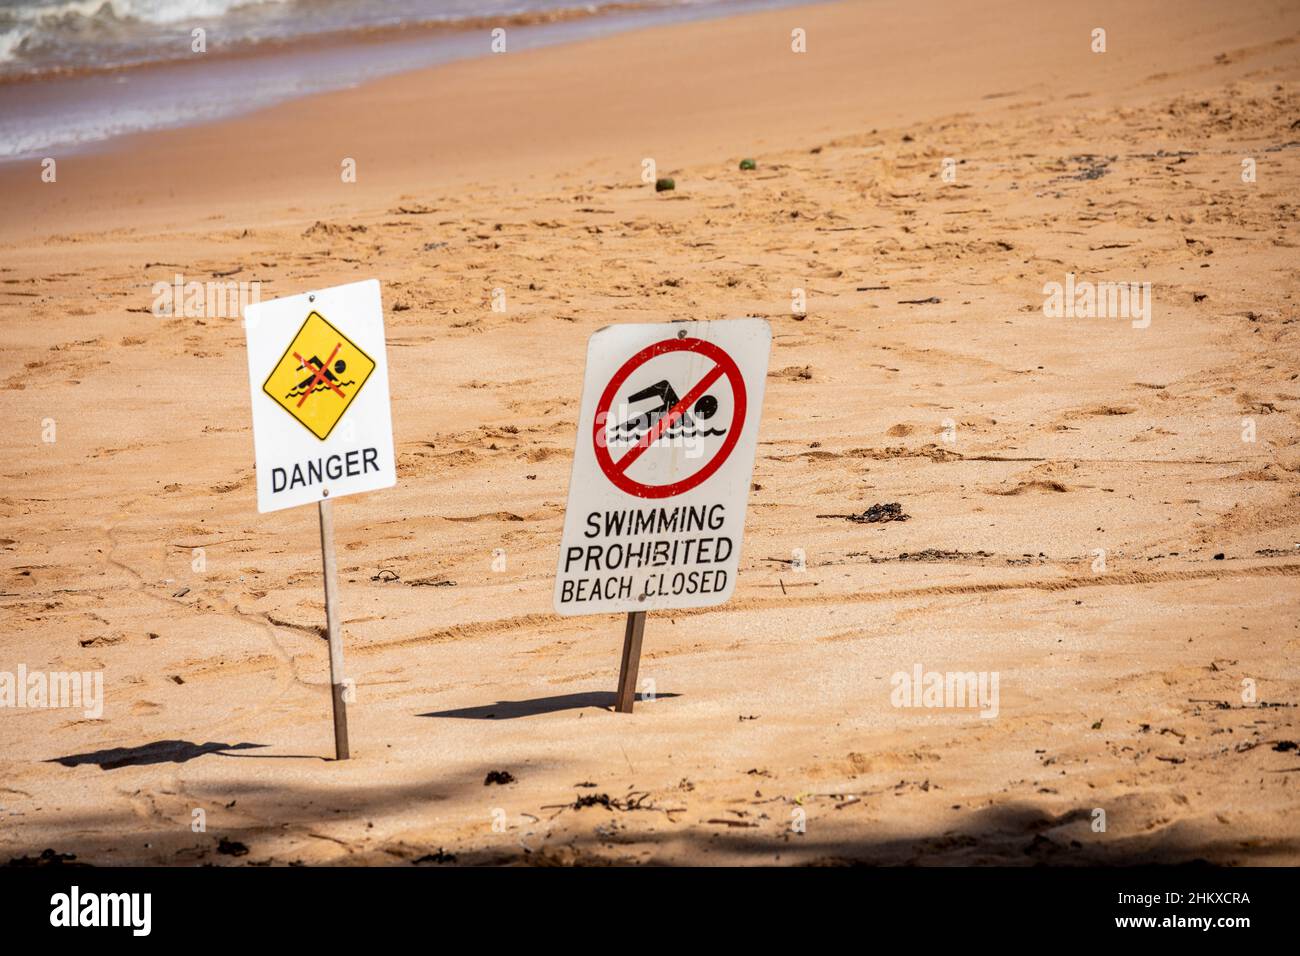 Danger and swimming prohibited on closed beach, Avalon Beach,NSW,Australia Stock Photo